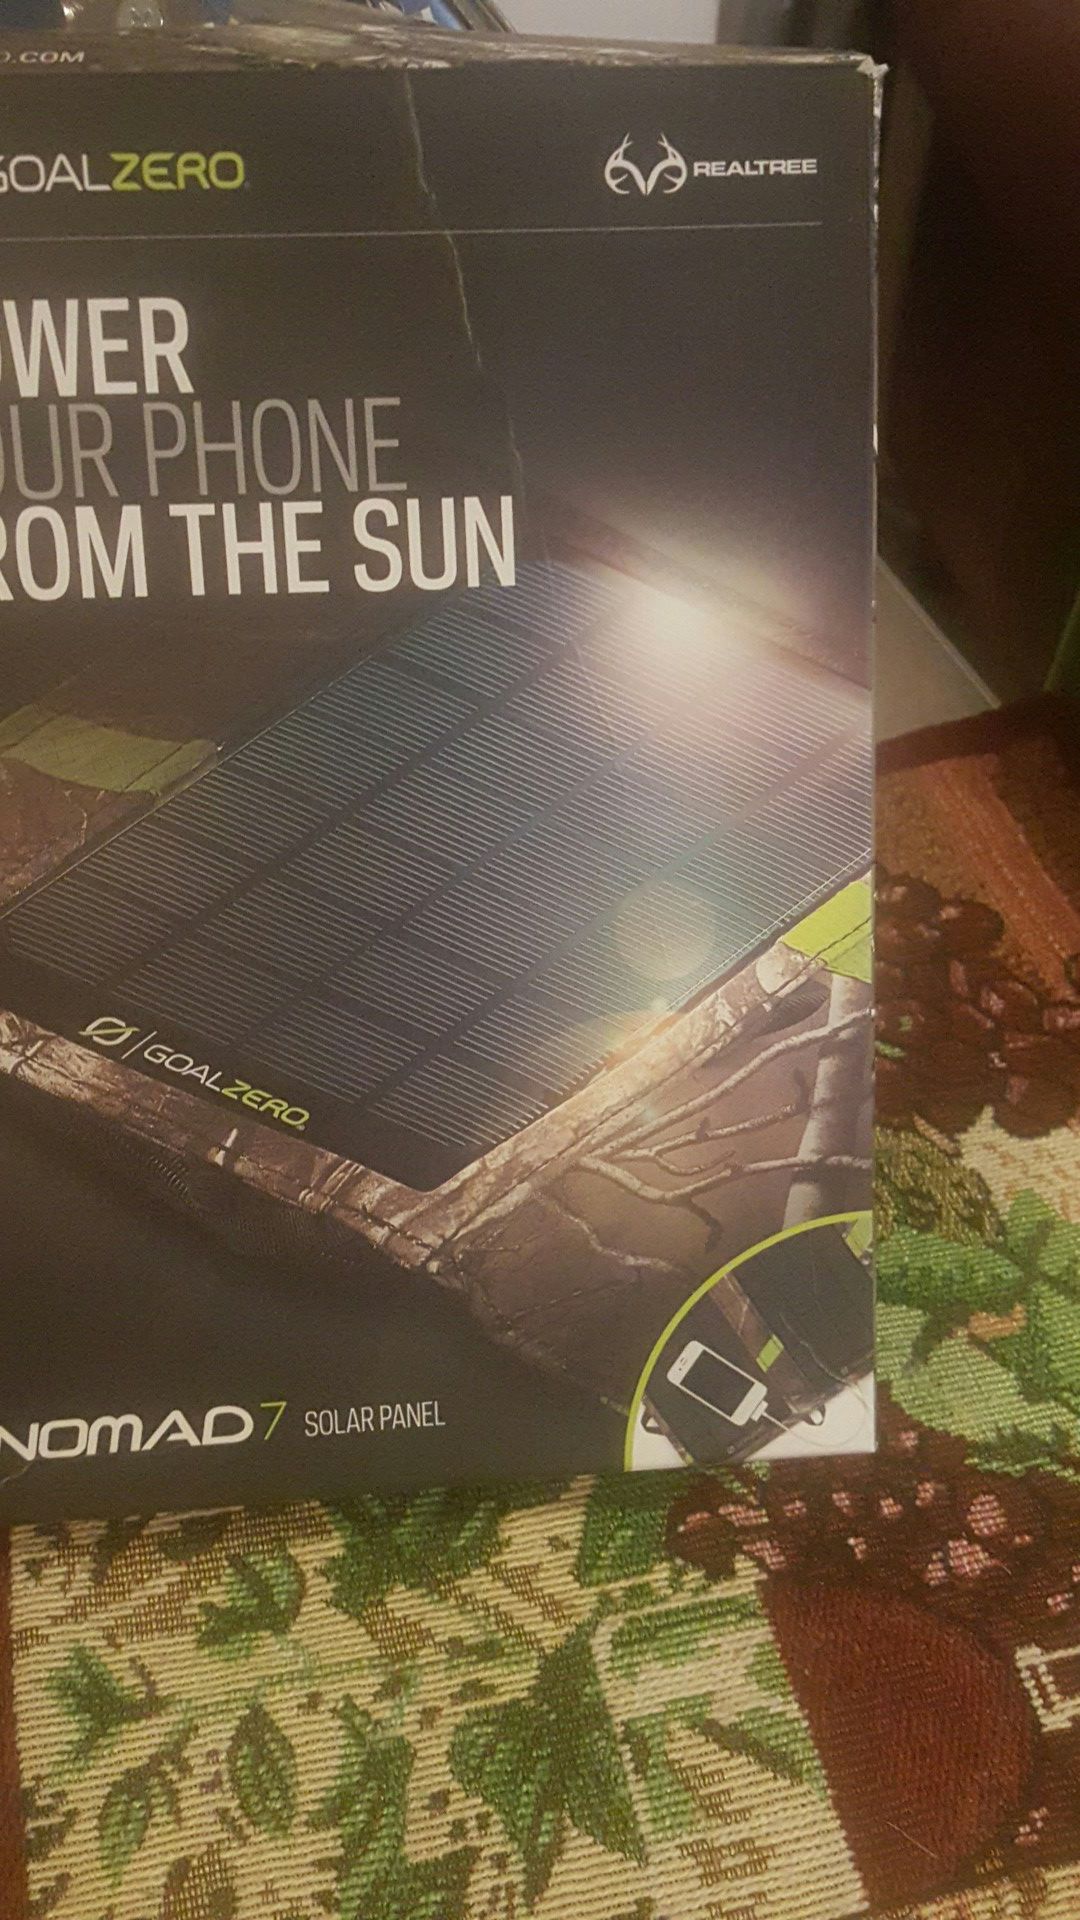 Nomad 7 solar panel